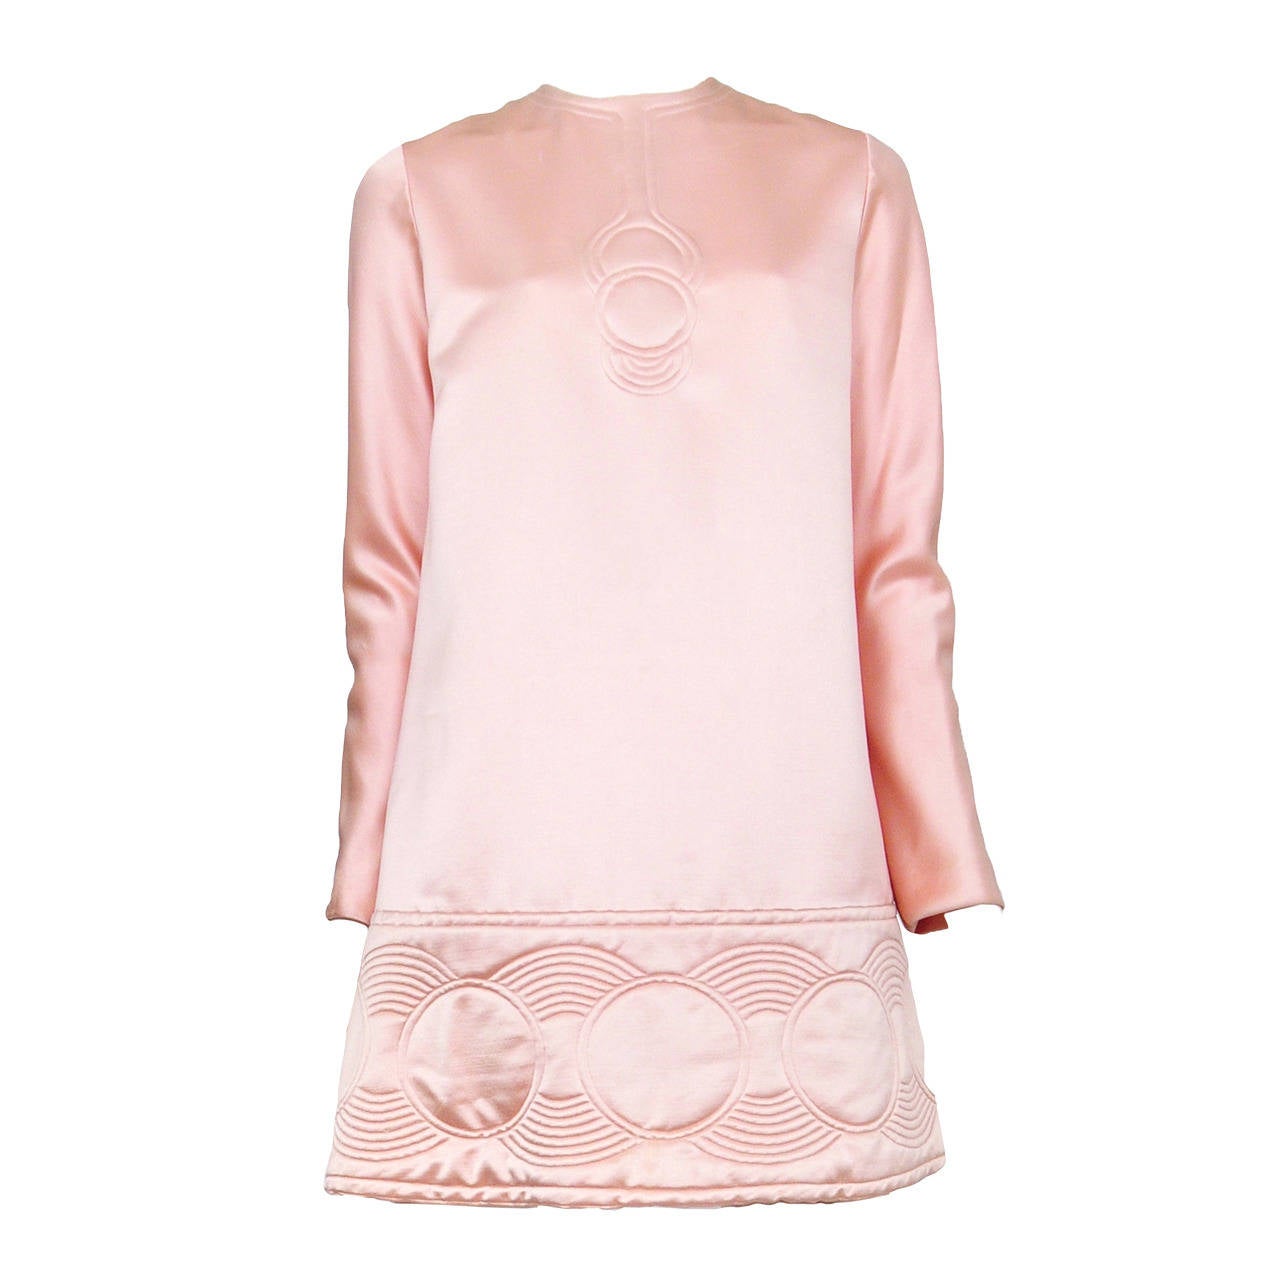 Pierre Cardin Pink Satin Dress